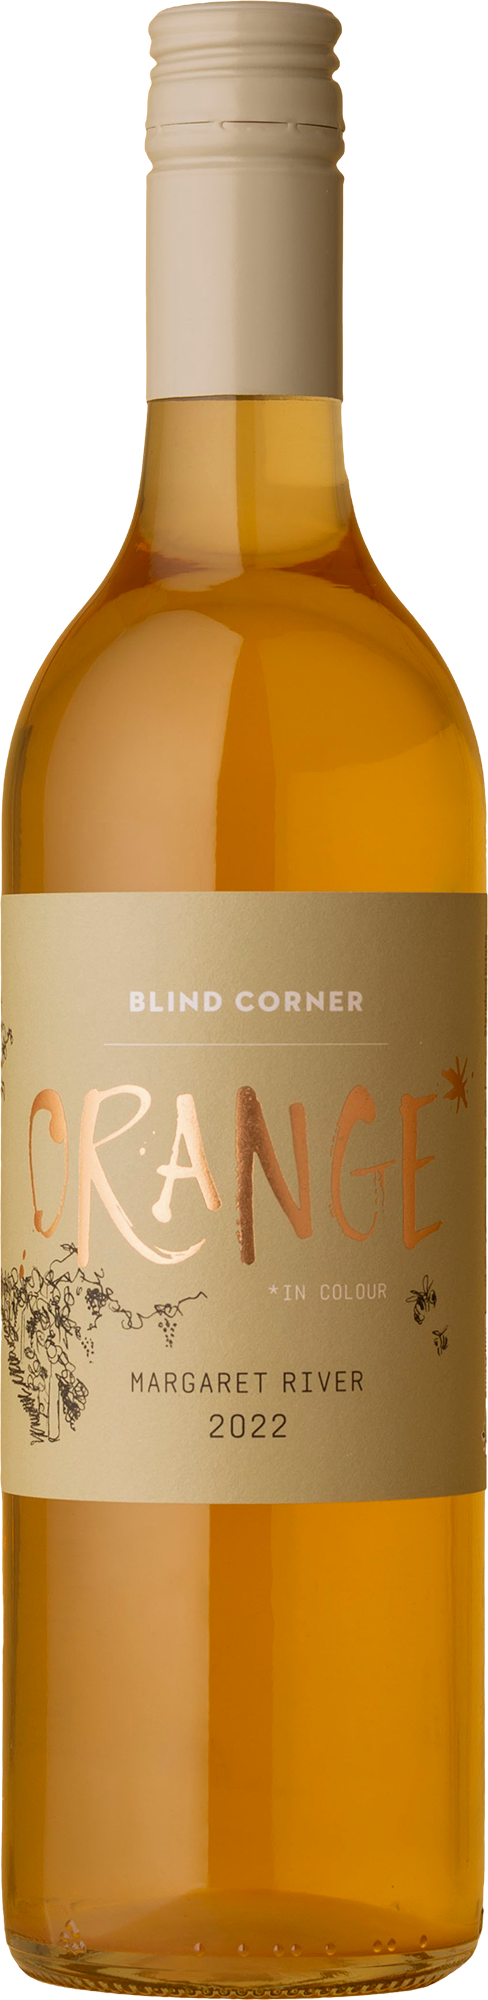 Blind Corner - Orange In Colour 2022